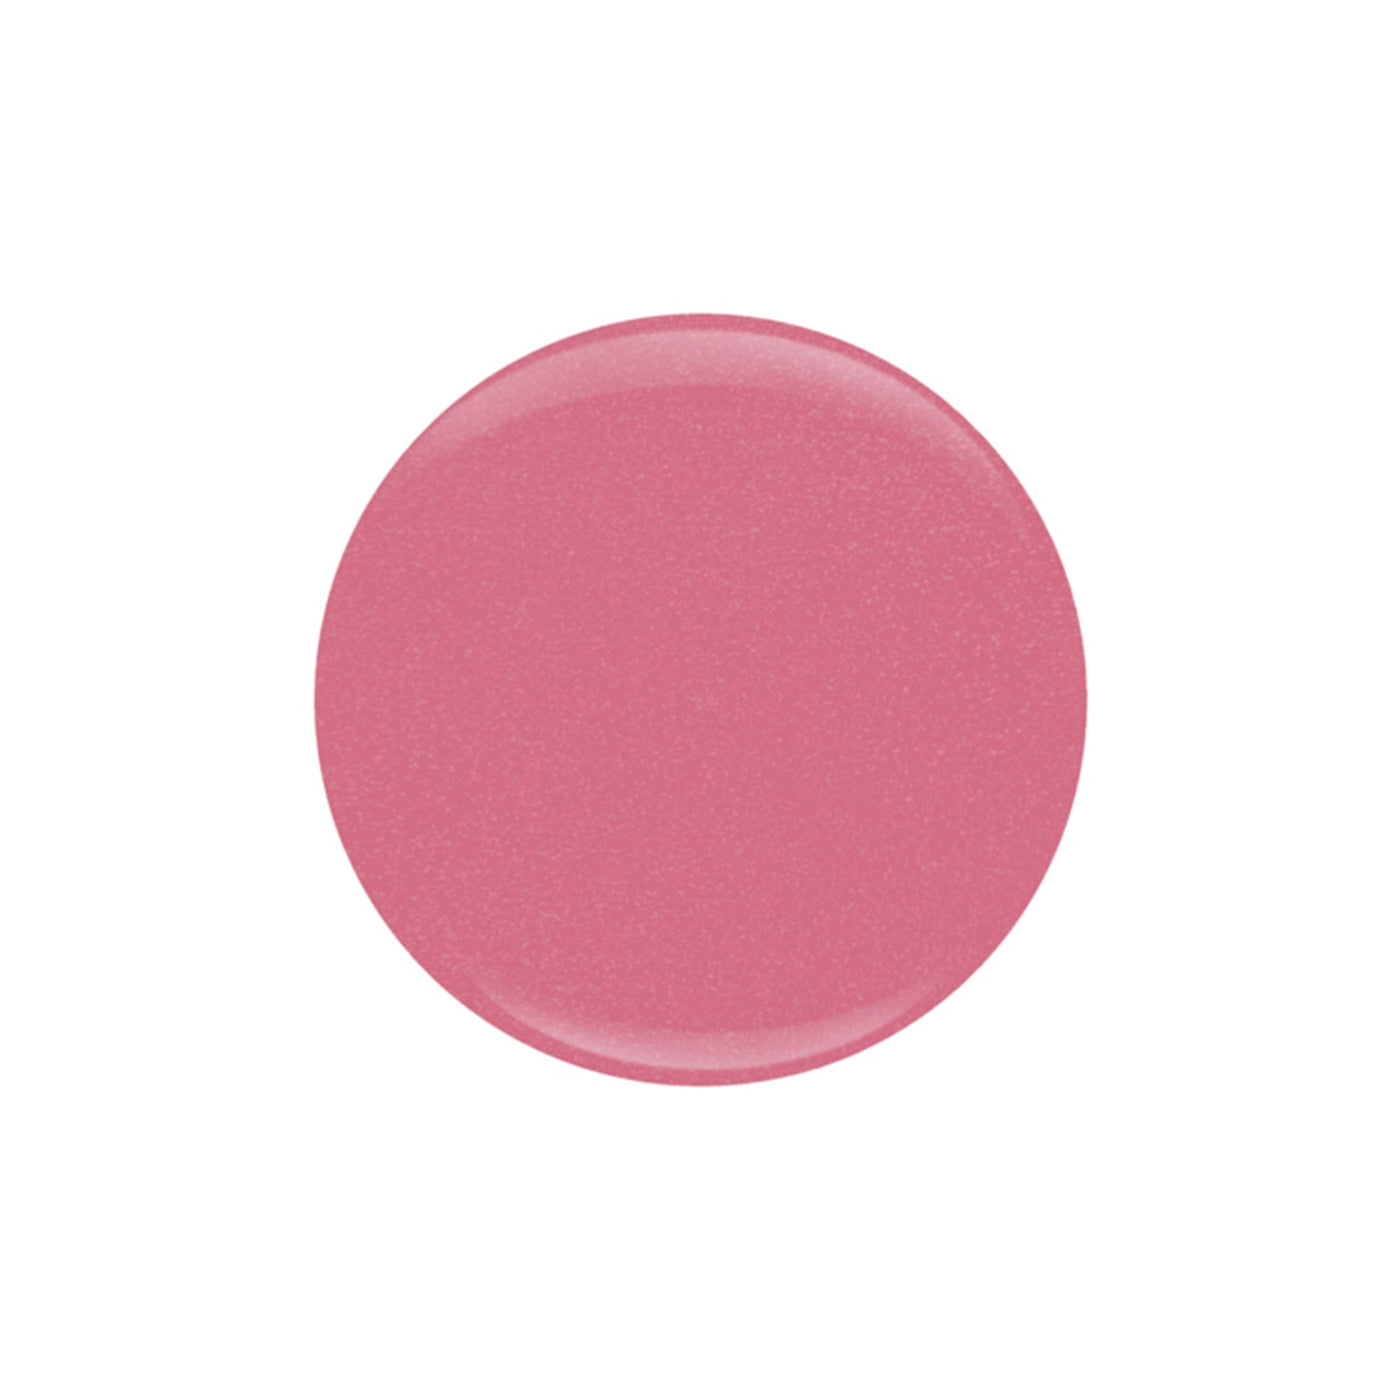 Professional manicure Entity Modelesque Medium Pink Shimmer Eocc Soak Off Gel Polish